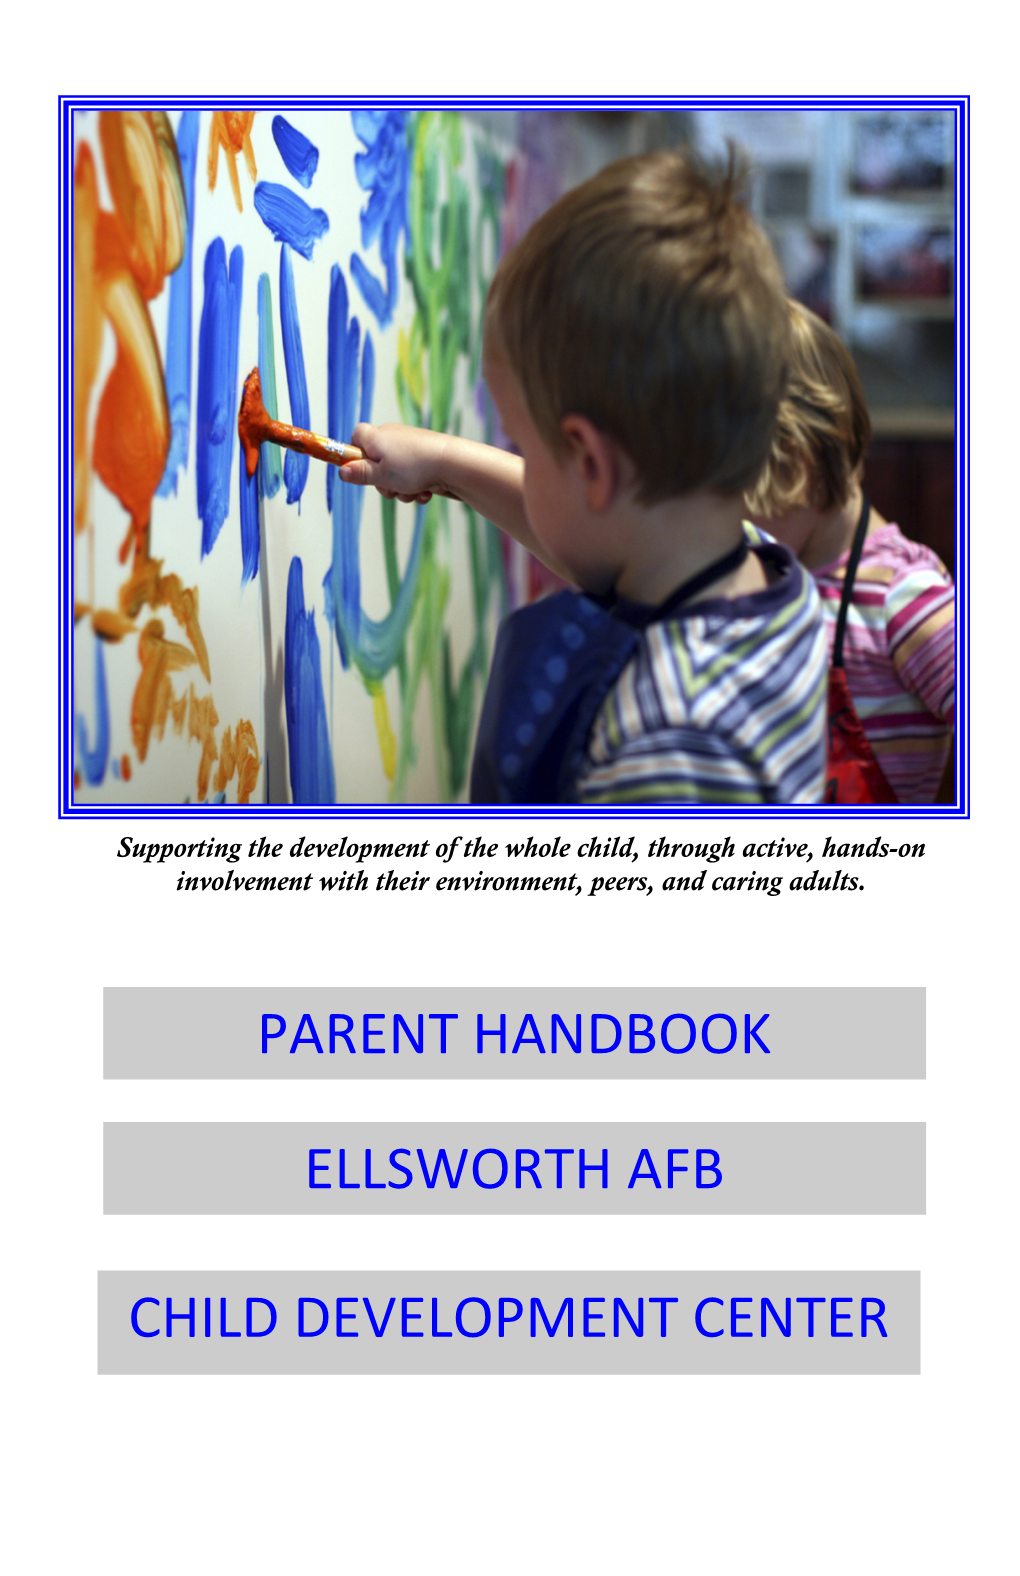 Child Development Center Ellsworth Afb Parent